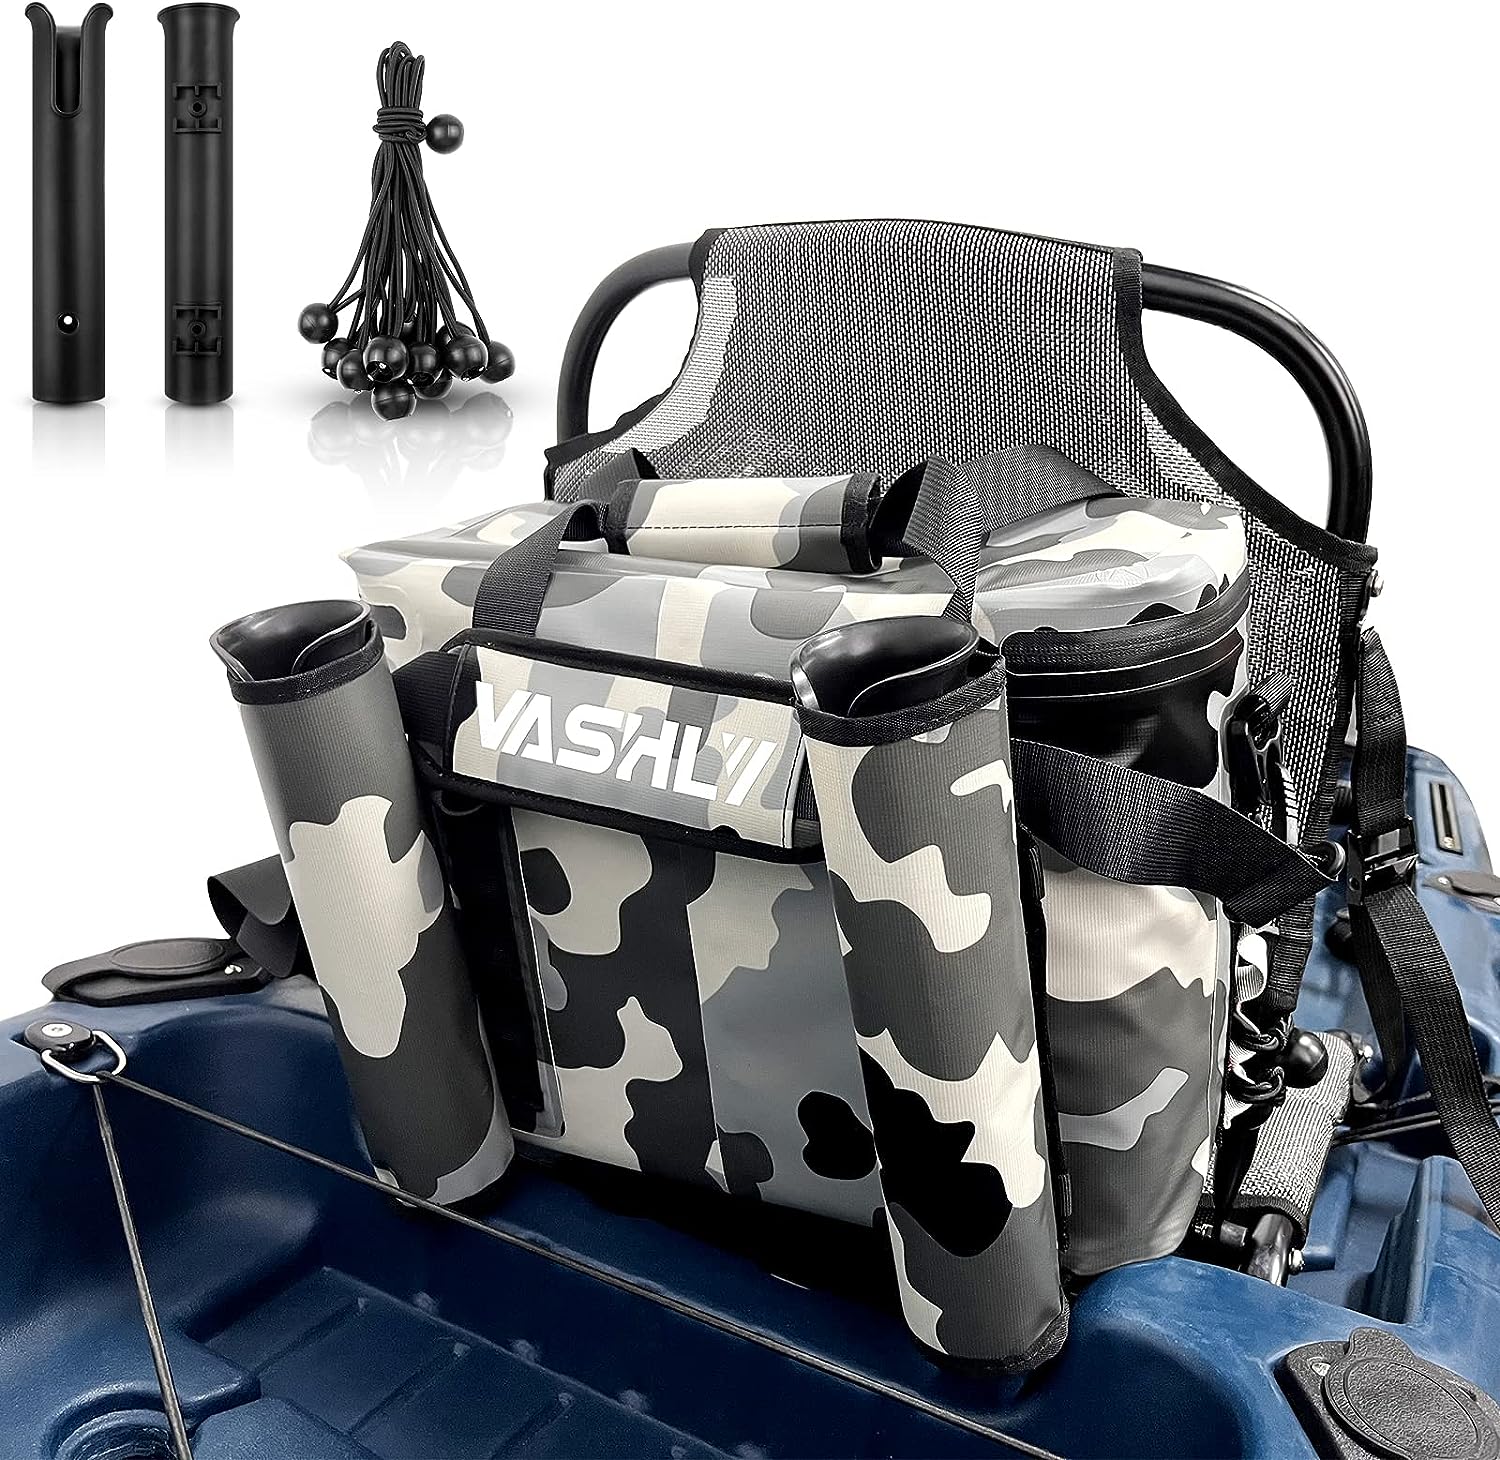 Vashly Kayak Cooler, Waterproof Seat Back Cooler for Kayaks, Kayak Accessories Cooler Bag, Cooler for Kayaking, Beaches, Travel, Lunch, Trips